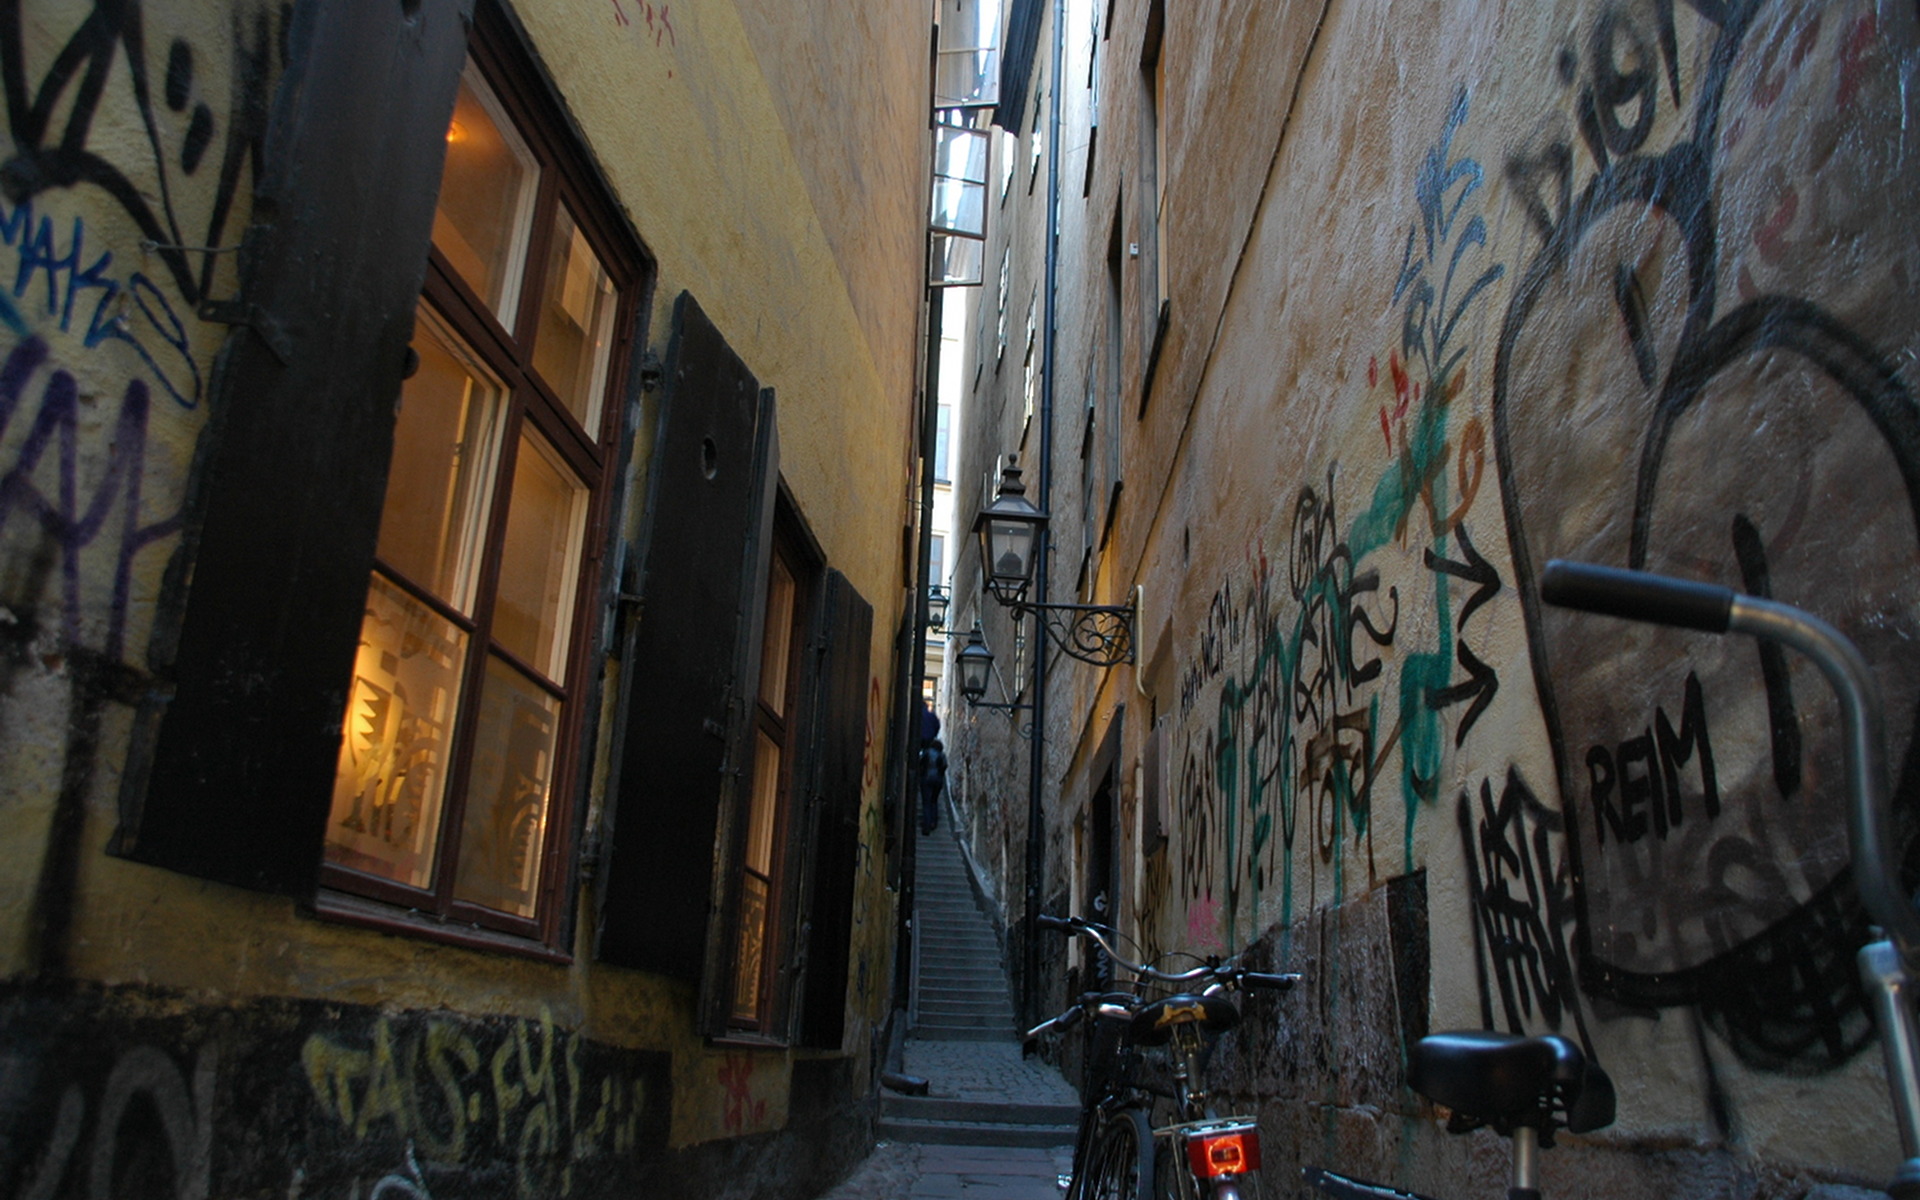 paint, artistic, graffiti, alley, city, urban cellphone